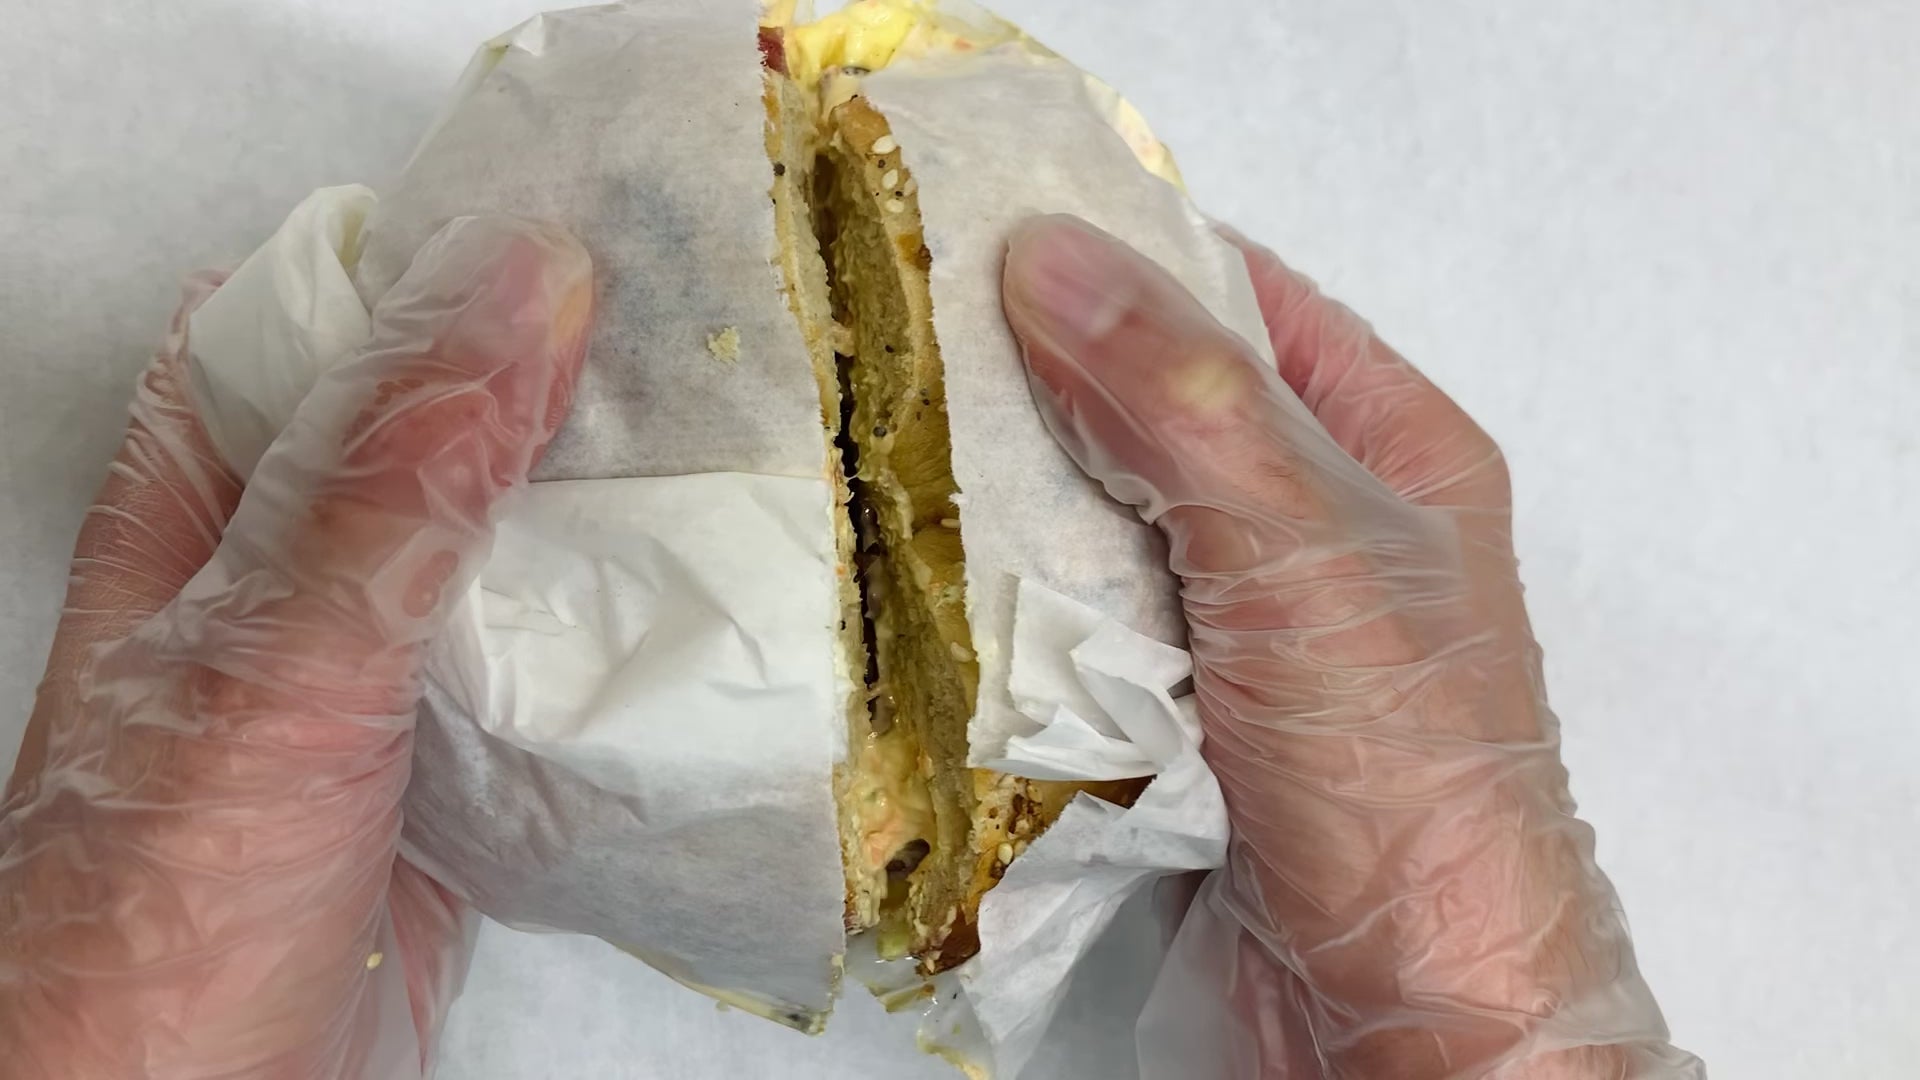 Load video: pork roll, egg &amp; cheese bagel sandwich